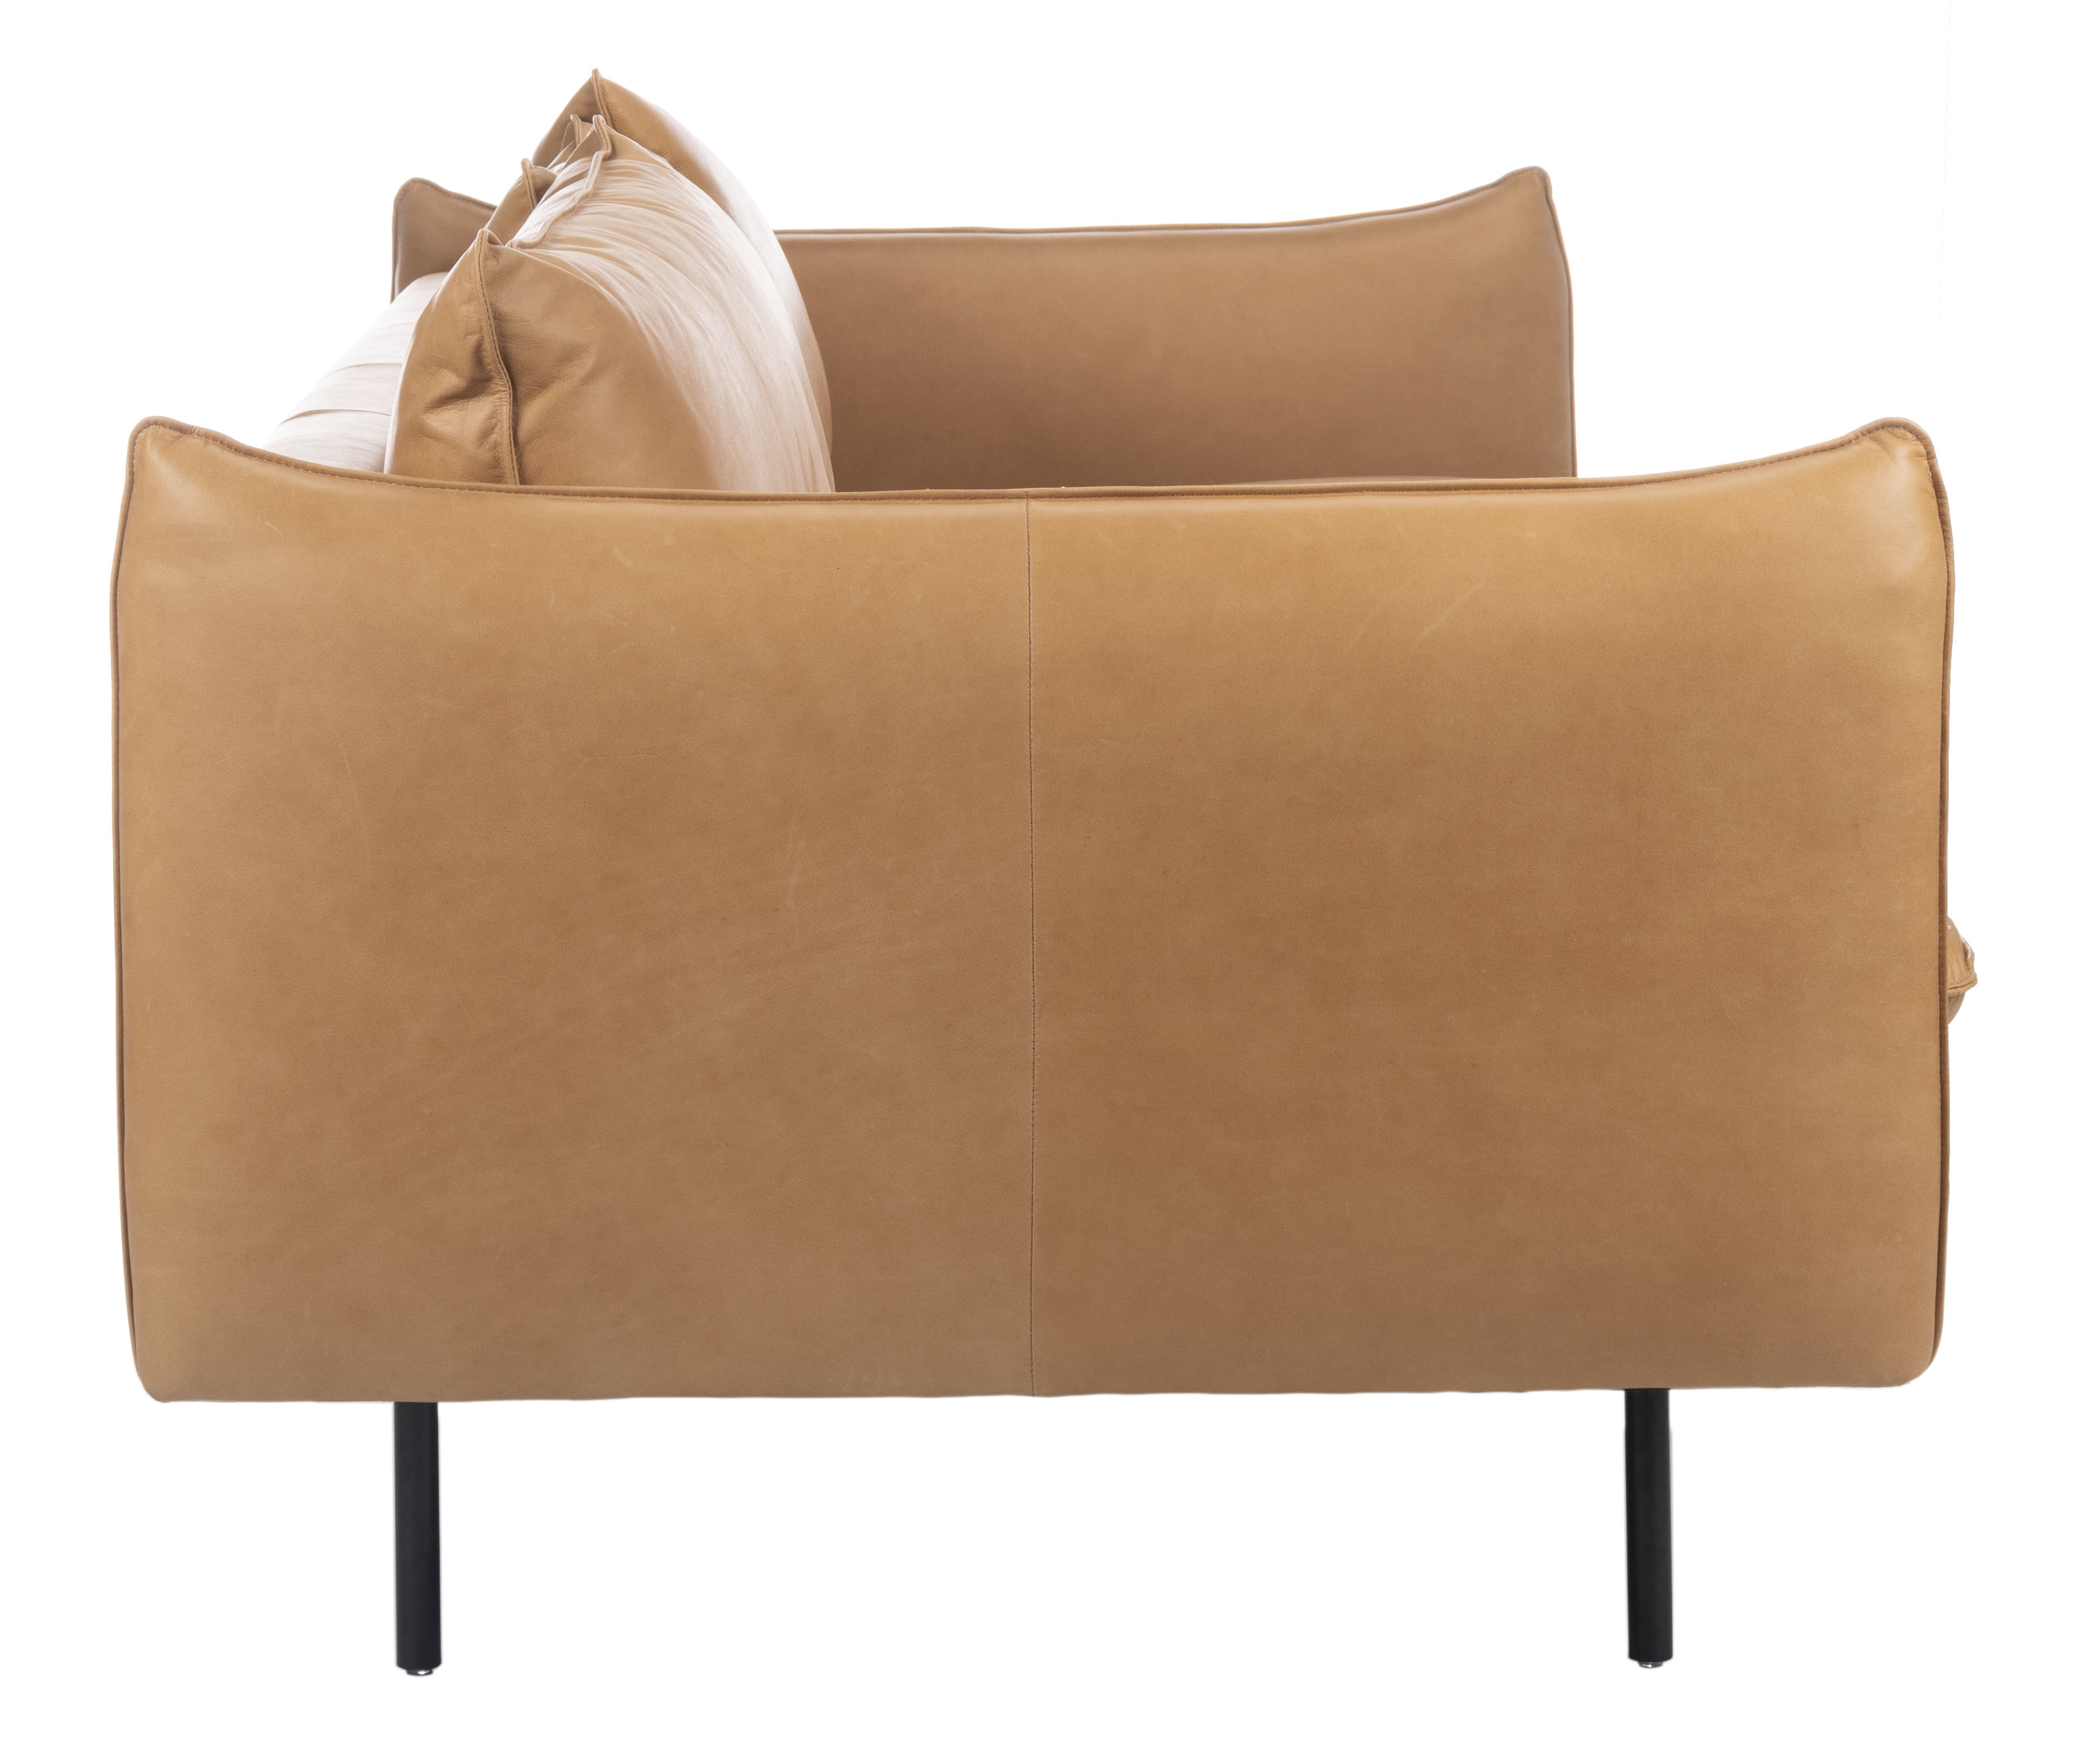 Gerlaich Italian Leather Sofa, Tan - Image 1